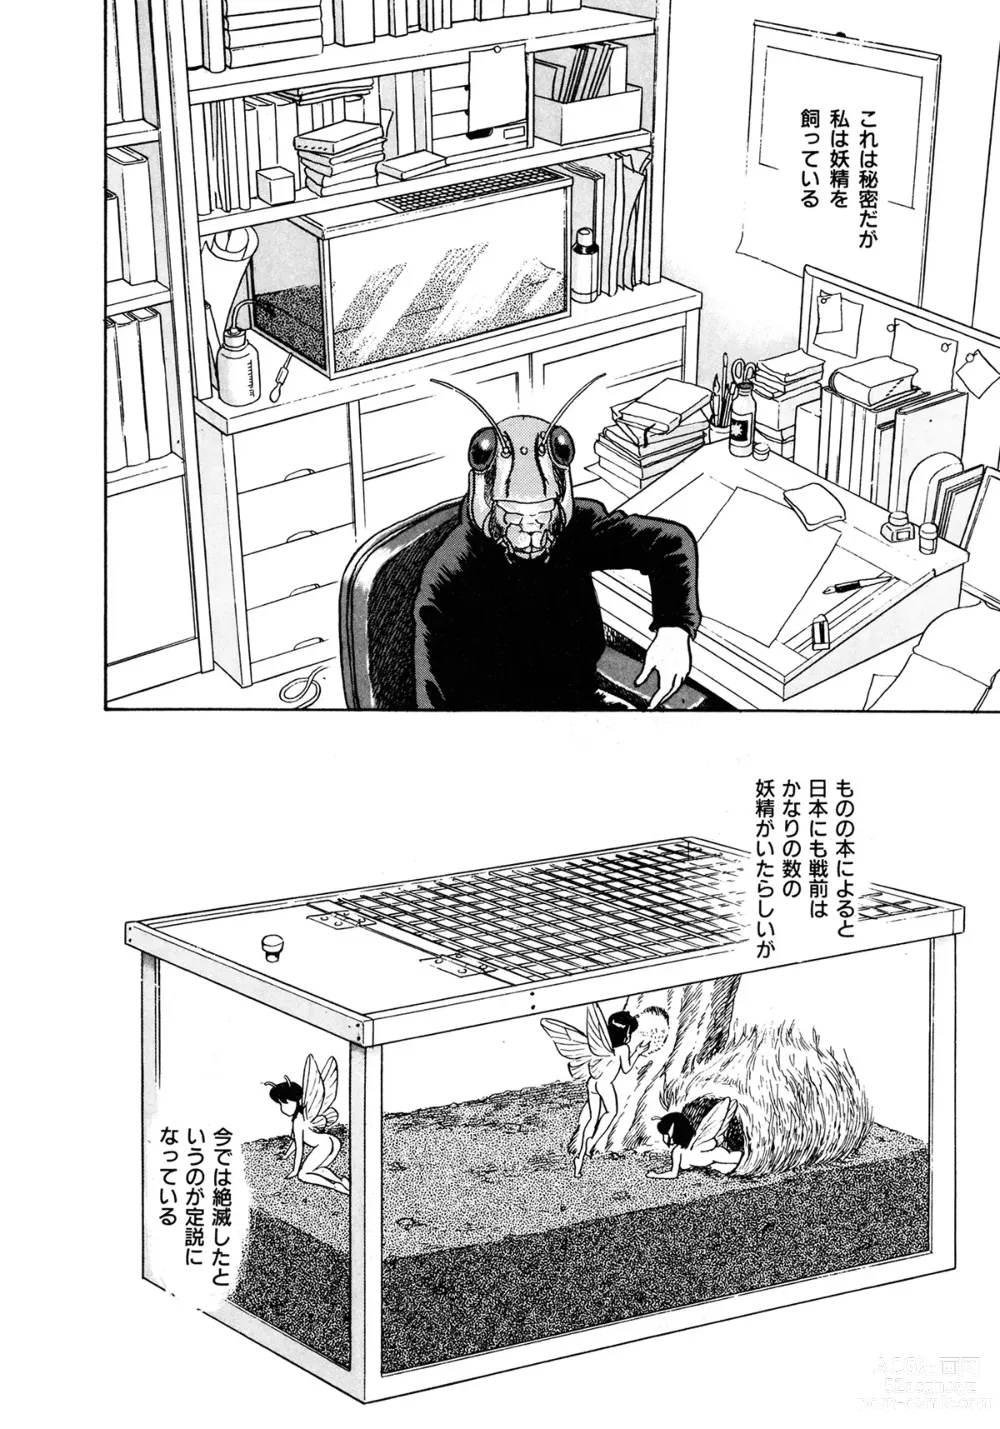 Page 149 of manga Insect Hunter